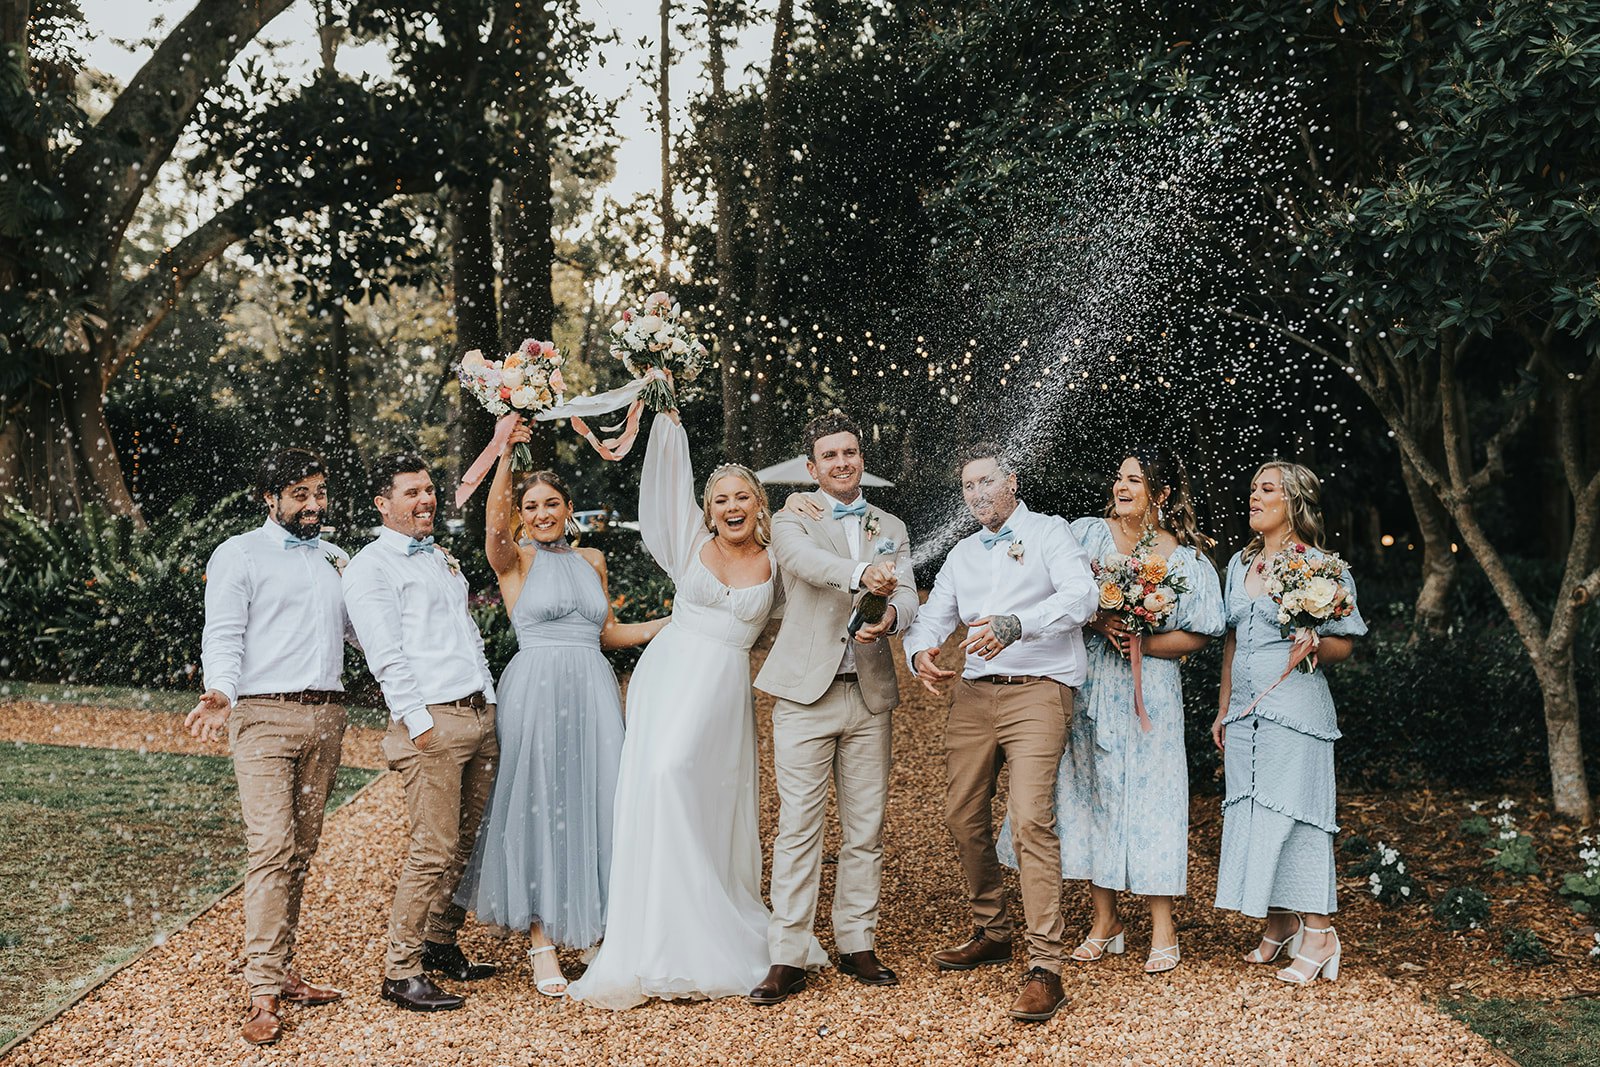 Wedding party spraying champagne